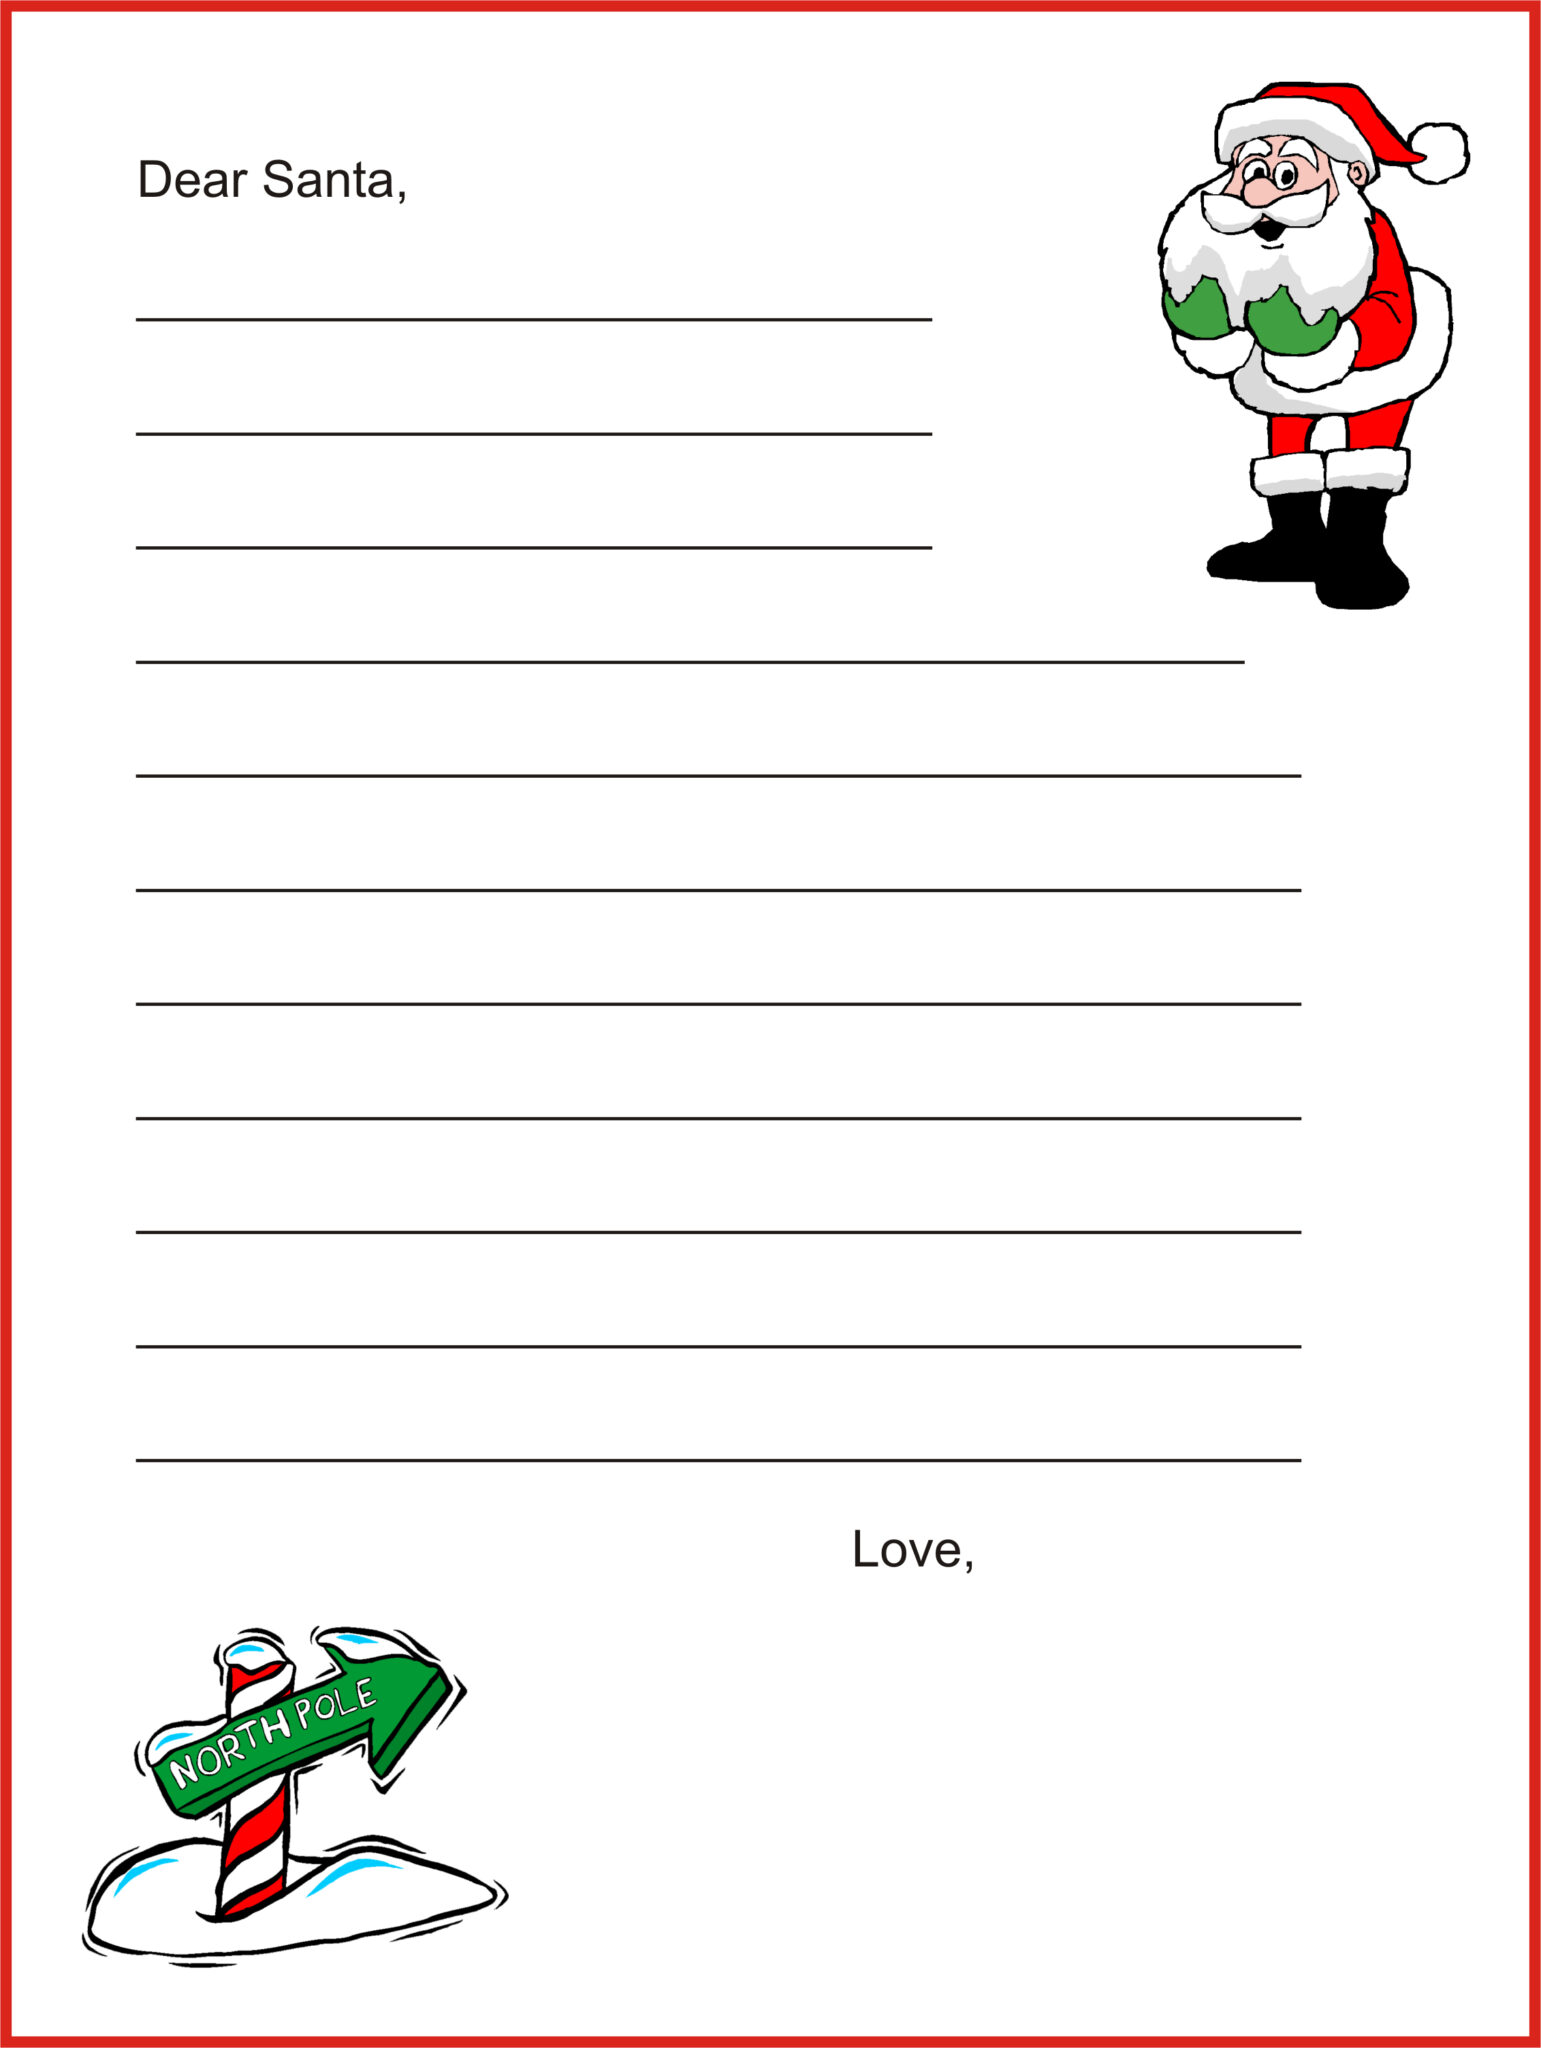 Dear Santa Letter in Blank Letter Writing Template For Kids Best